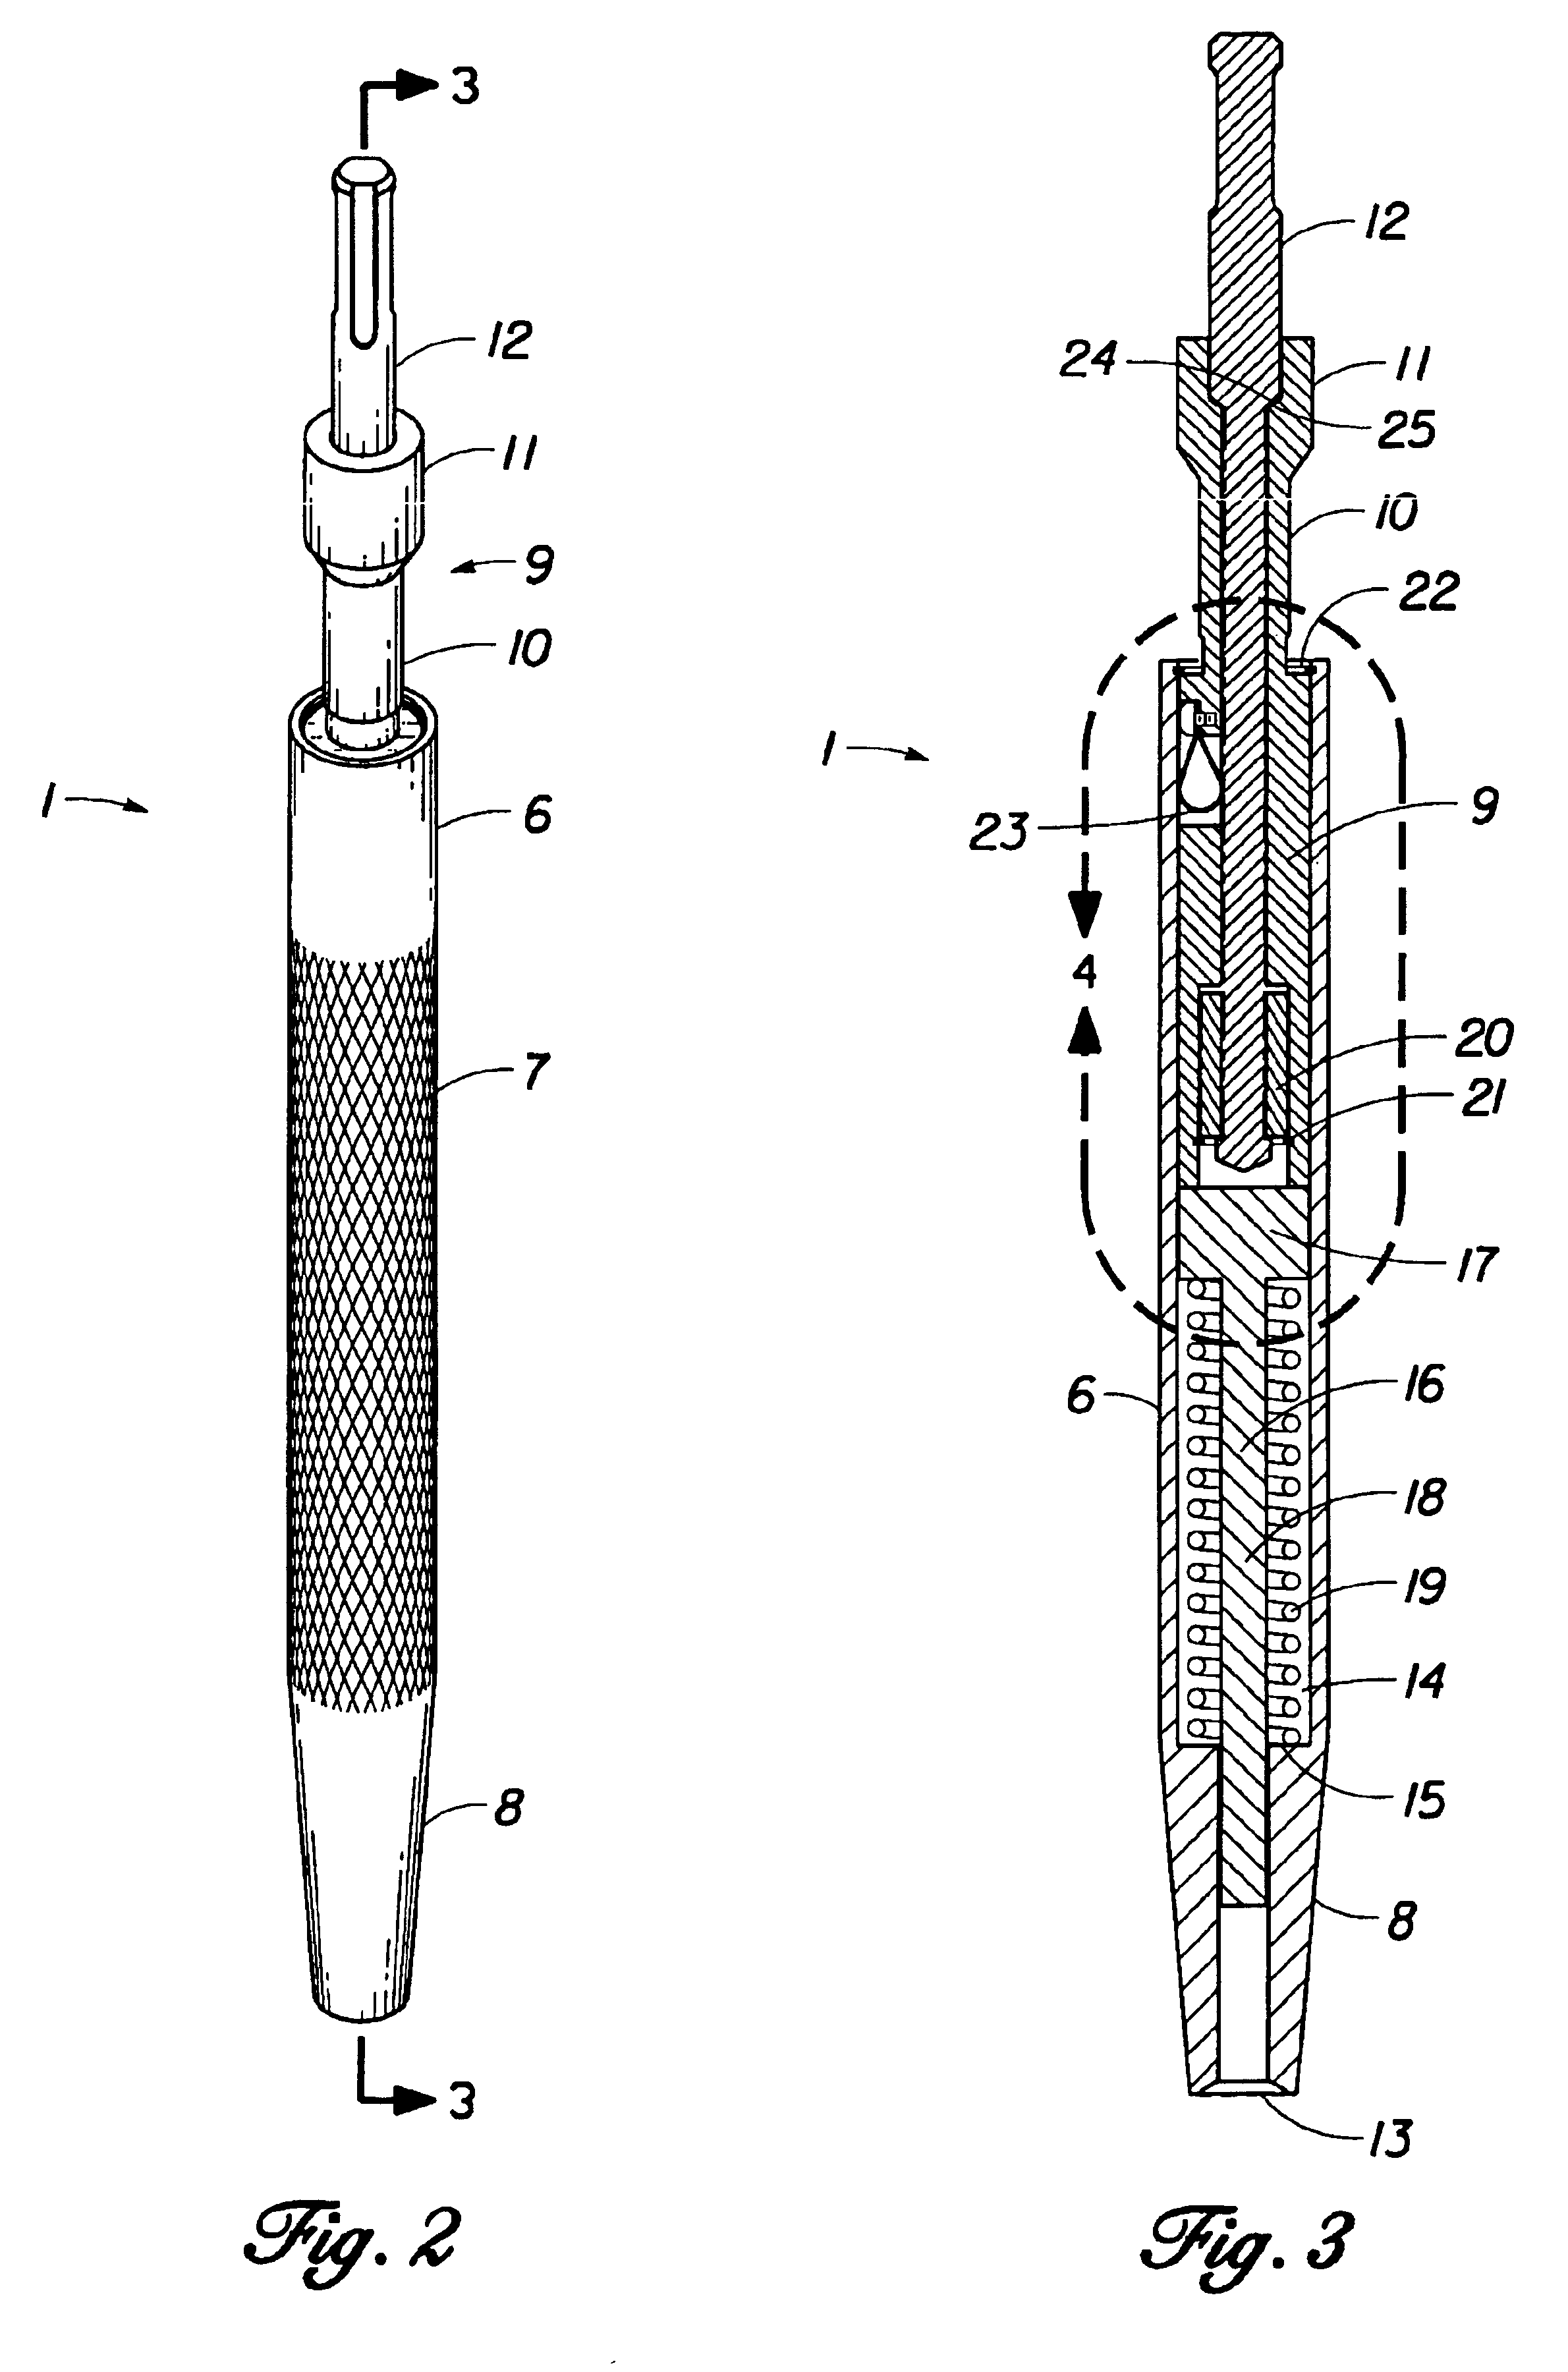 Tool for installing nail-pin anchors and anchor bolts